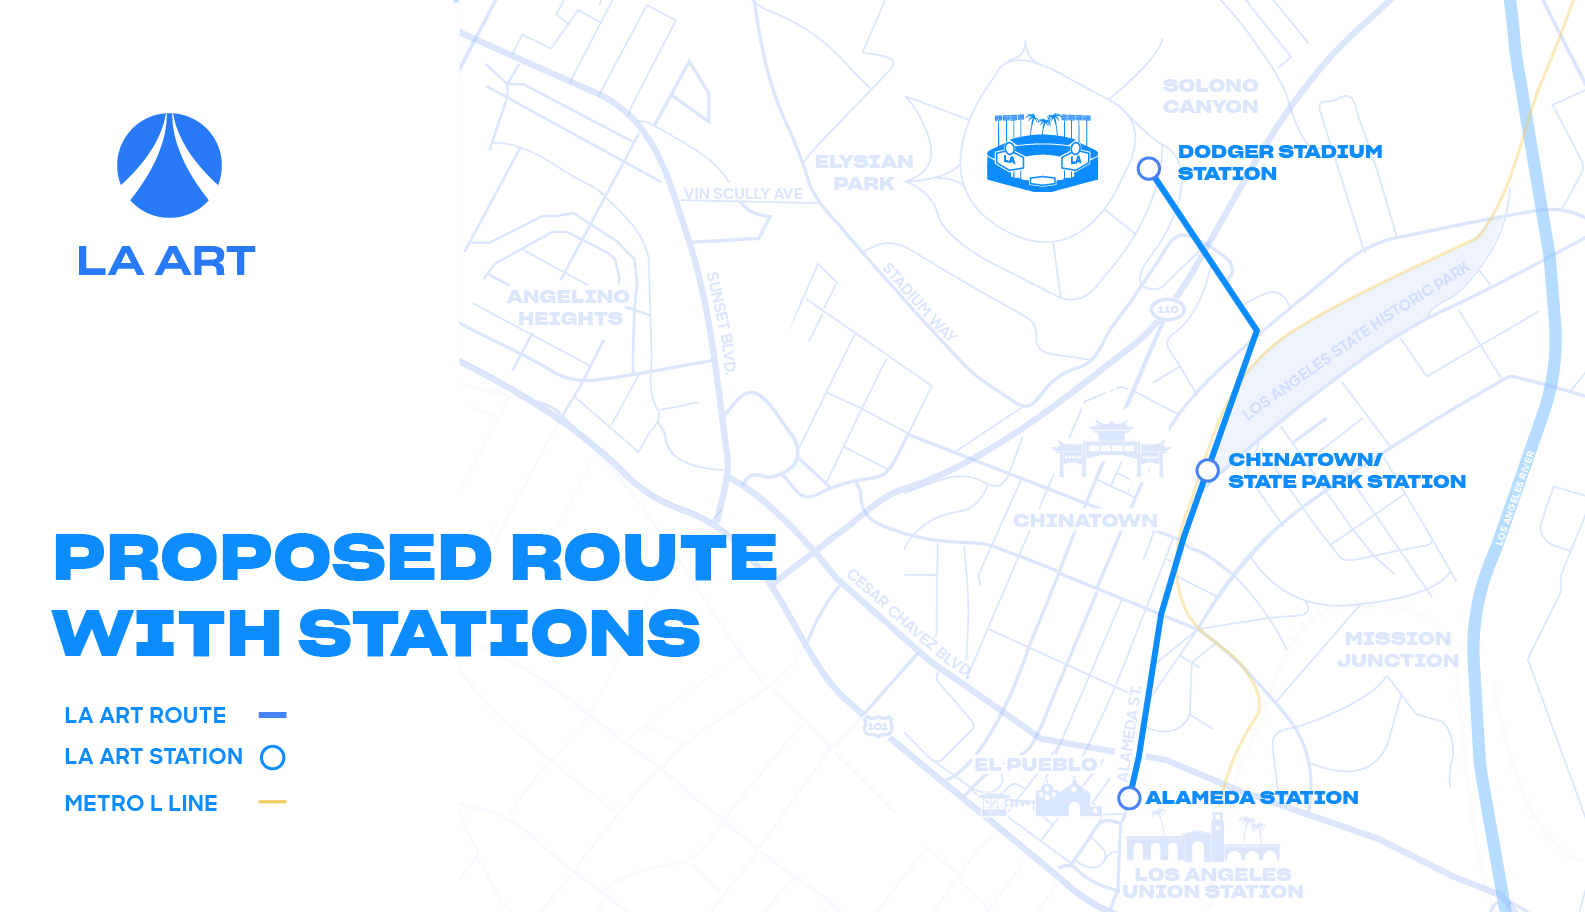 Route selected for Union Station - Dodger Stadium gondola